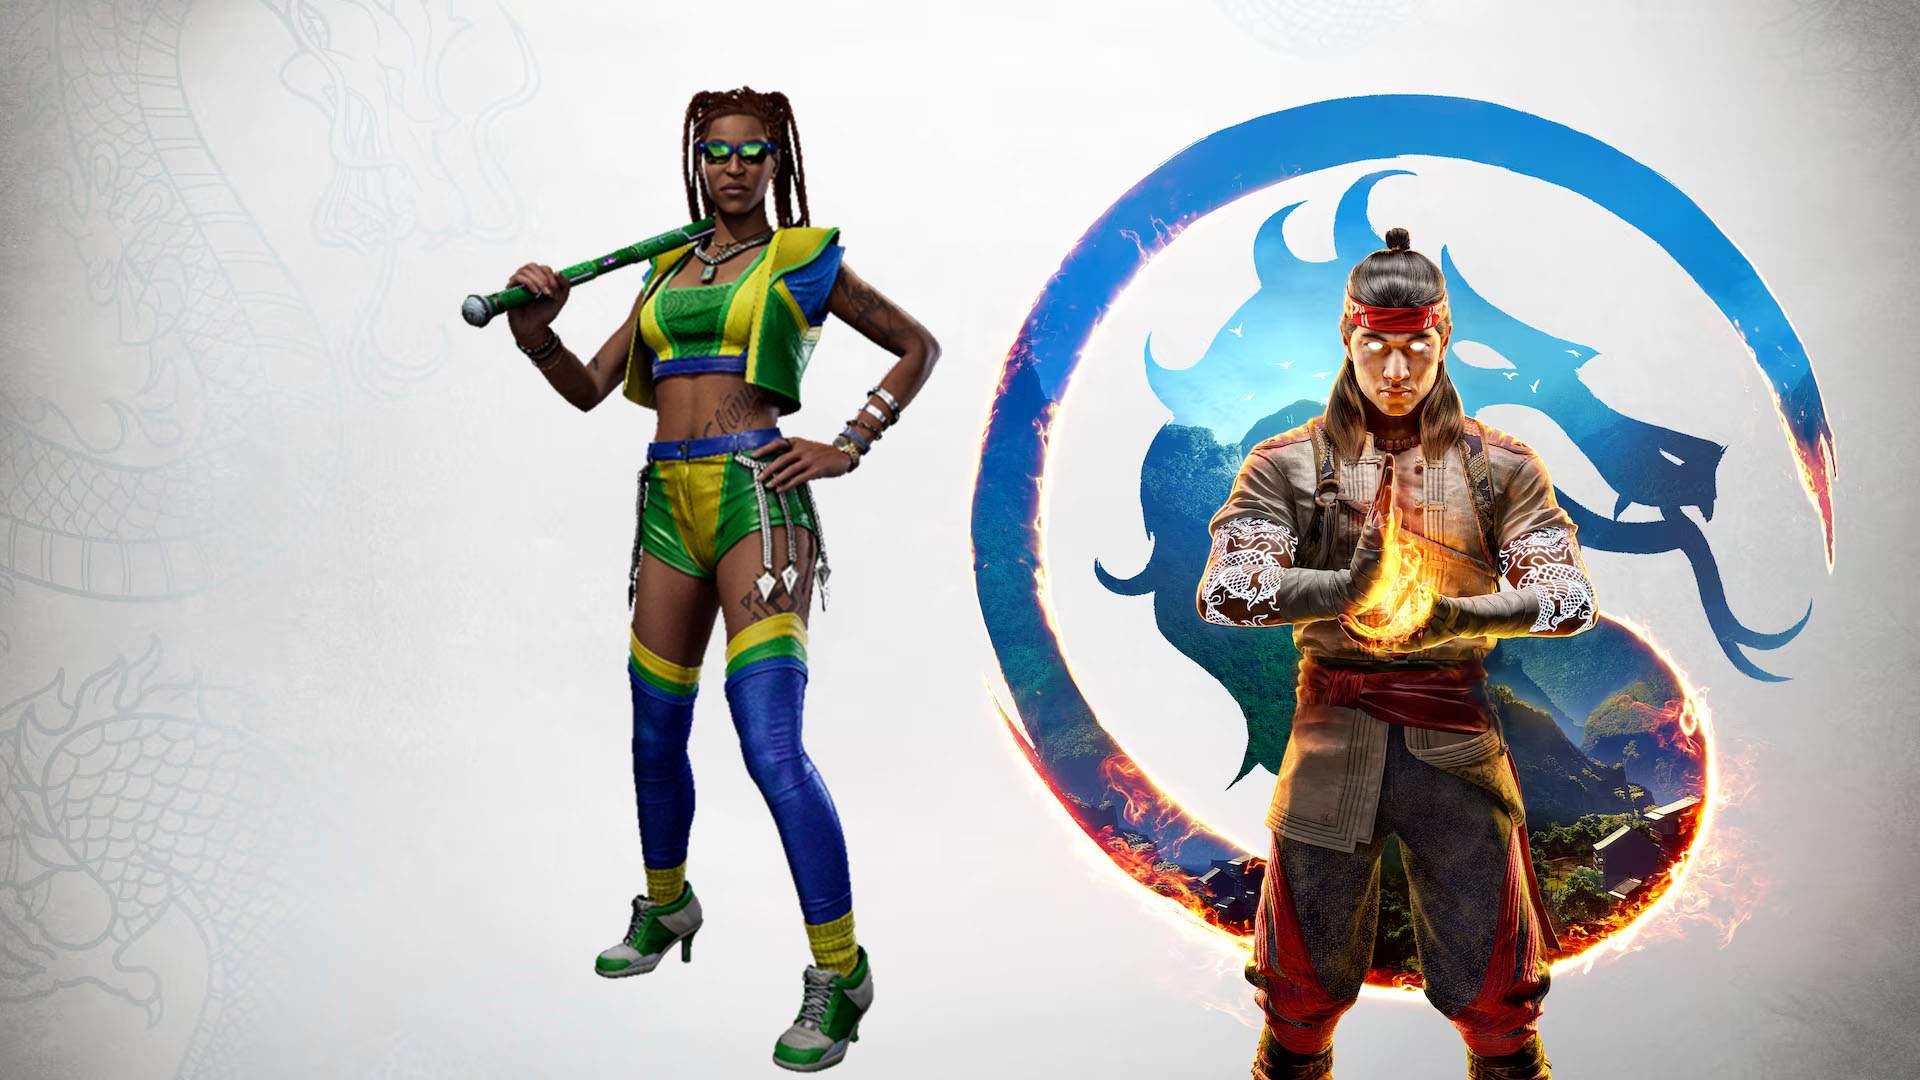 Mortal Kombat 1 recebe novos personagens - Olhar Digital